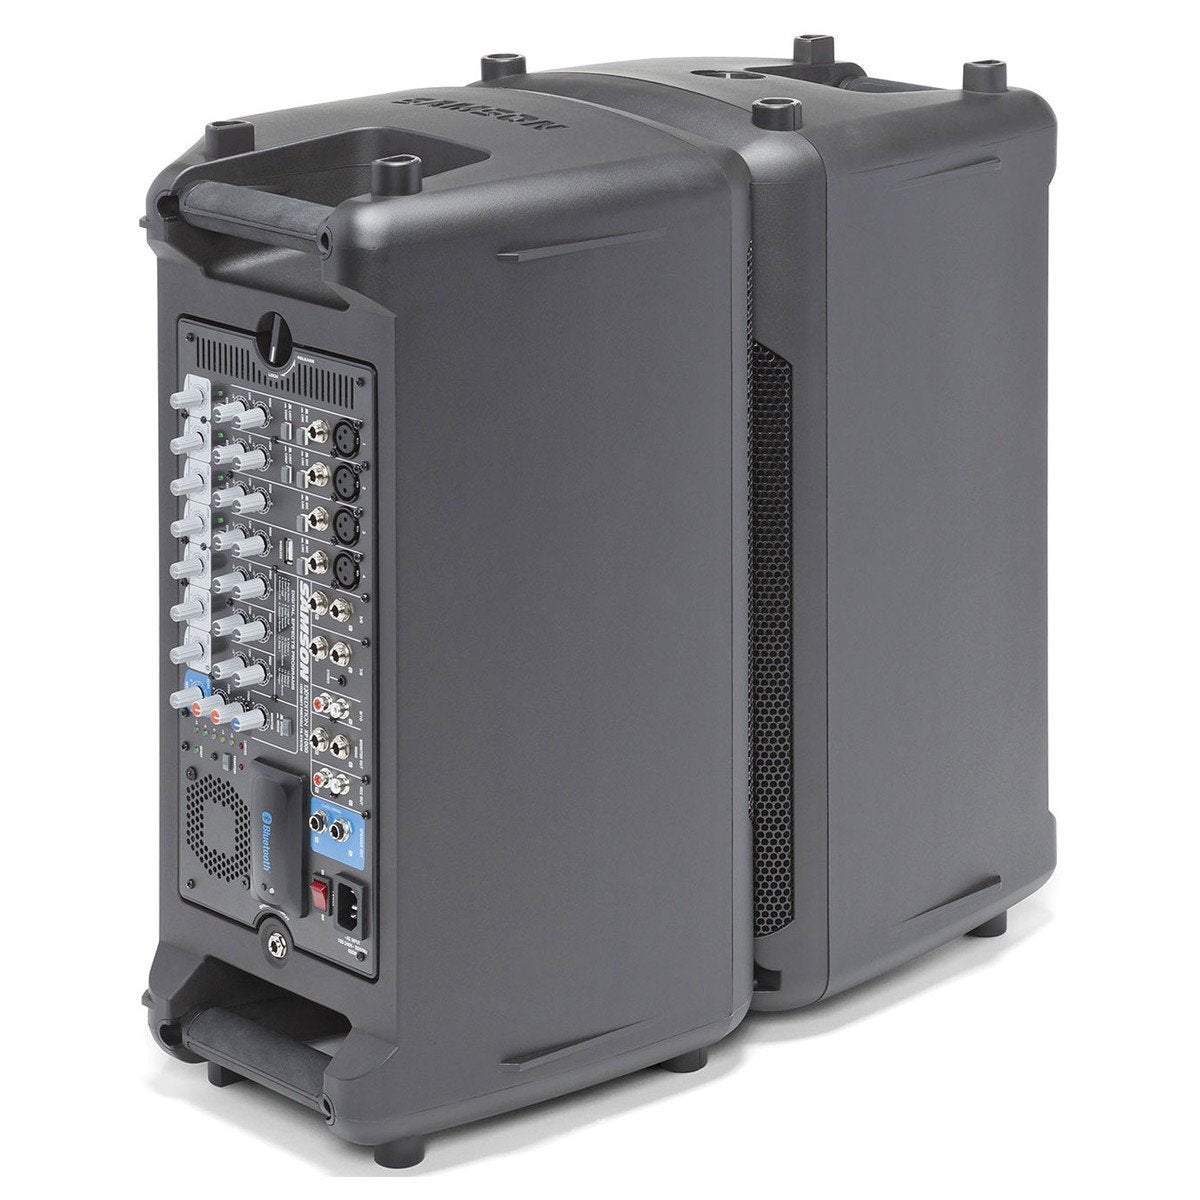 Samson SAXP1000 Expedition Portable PA System - DY Pro Audio